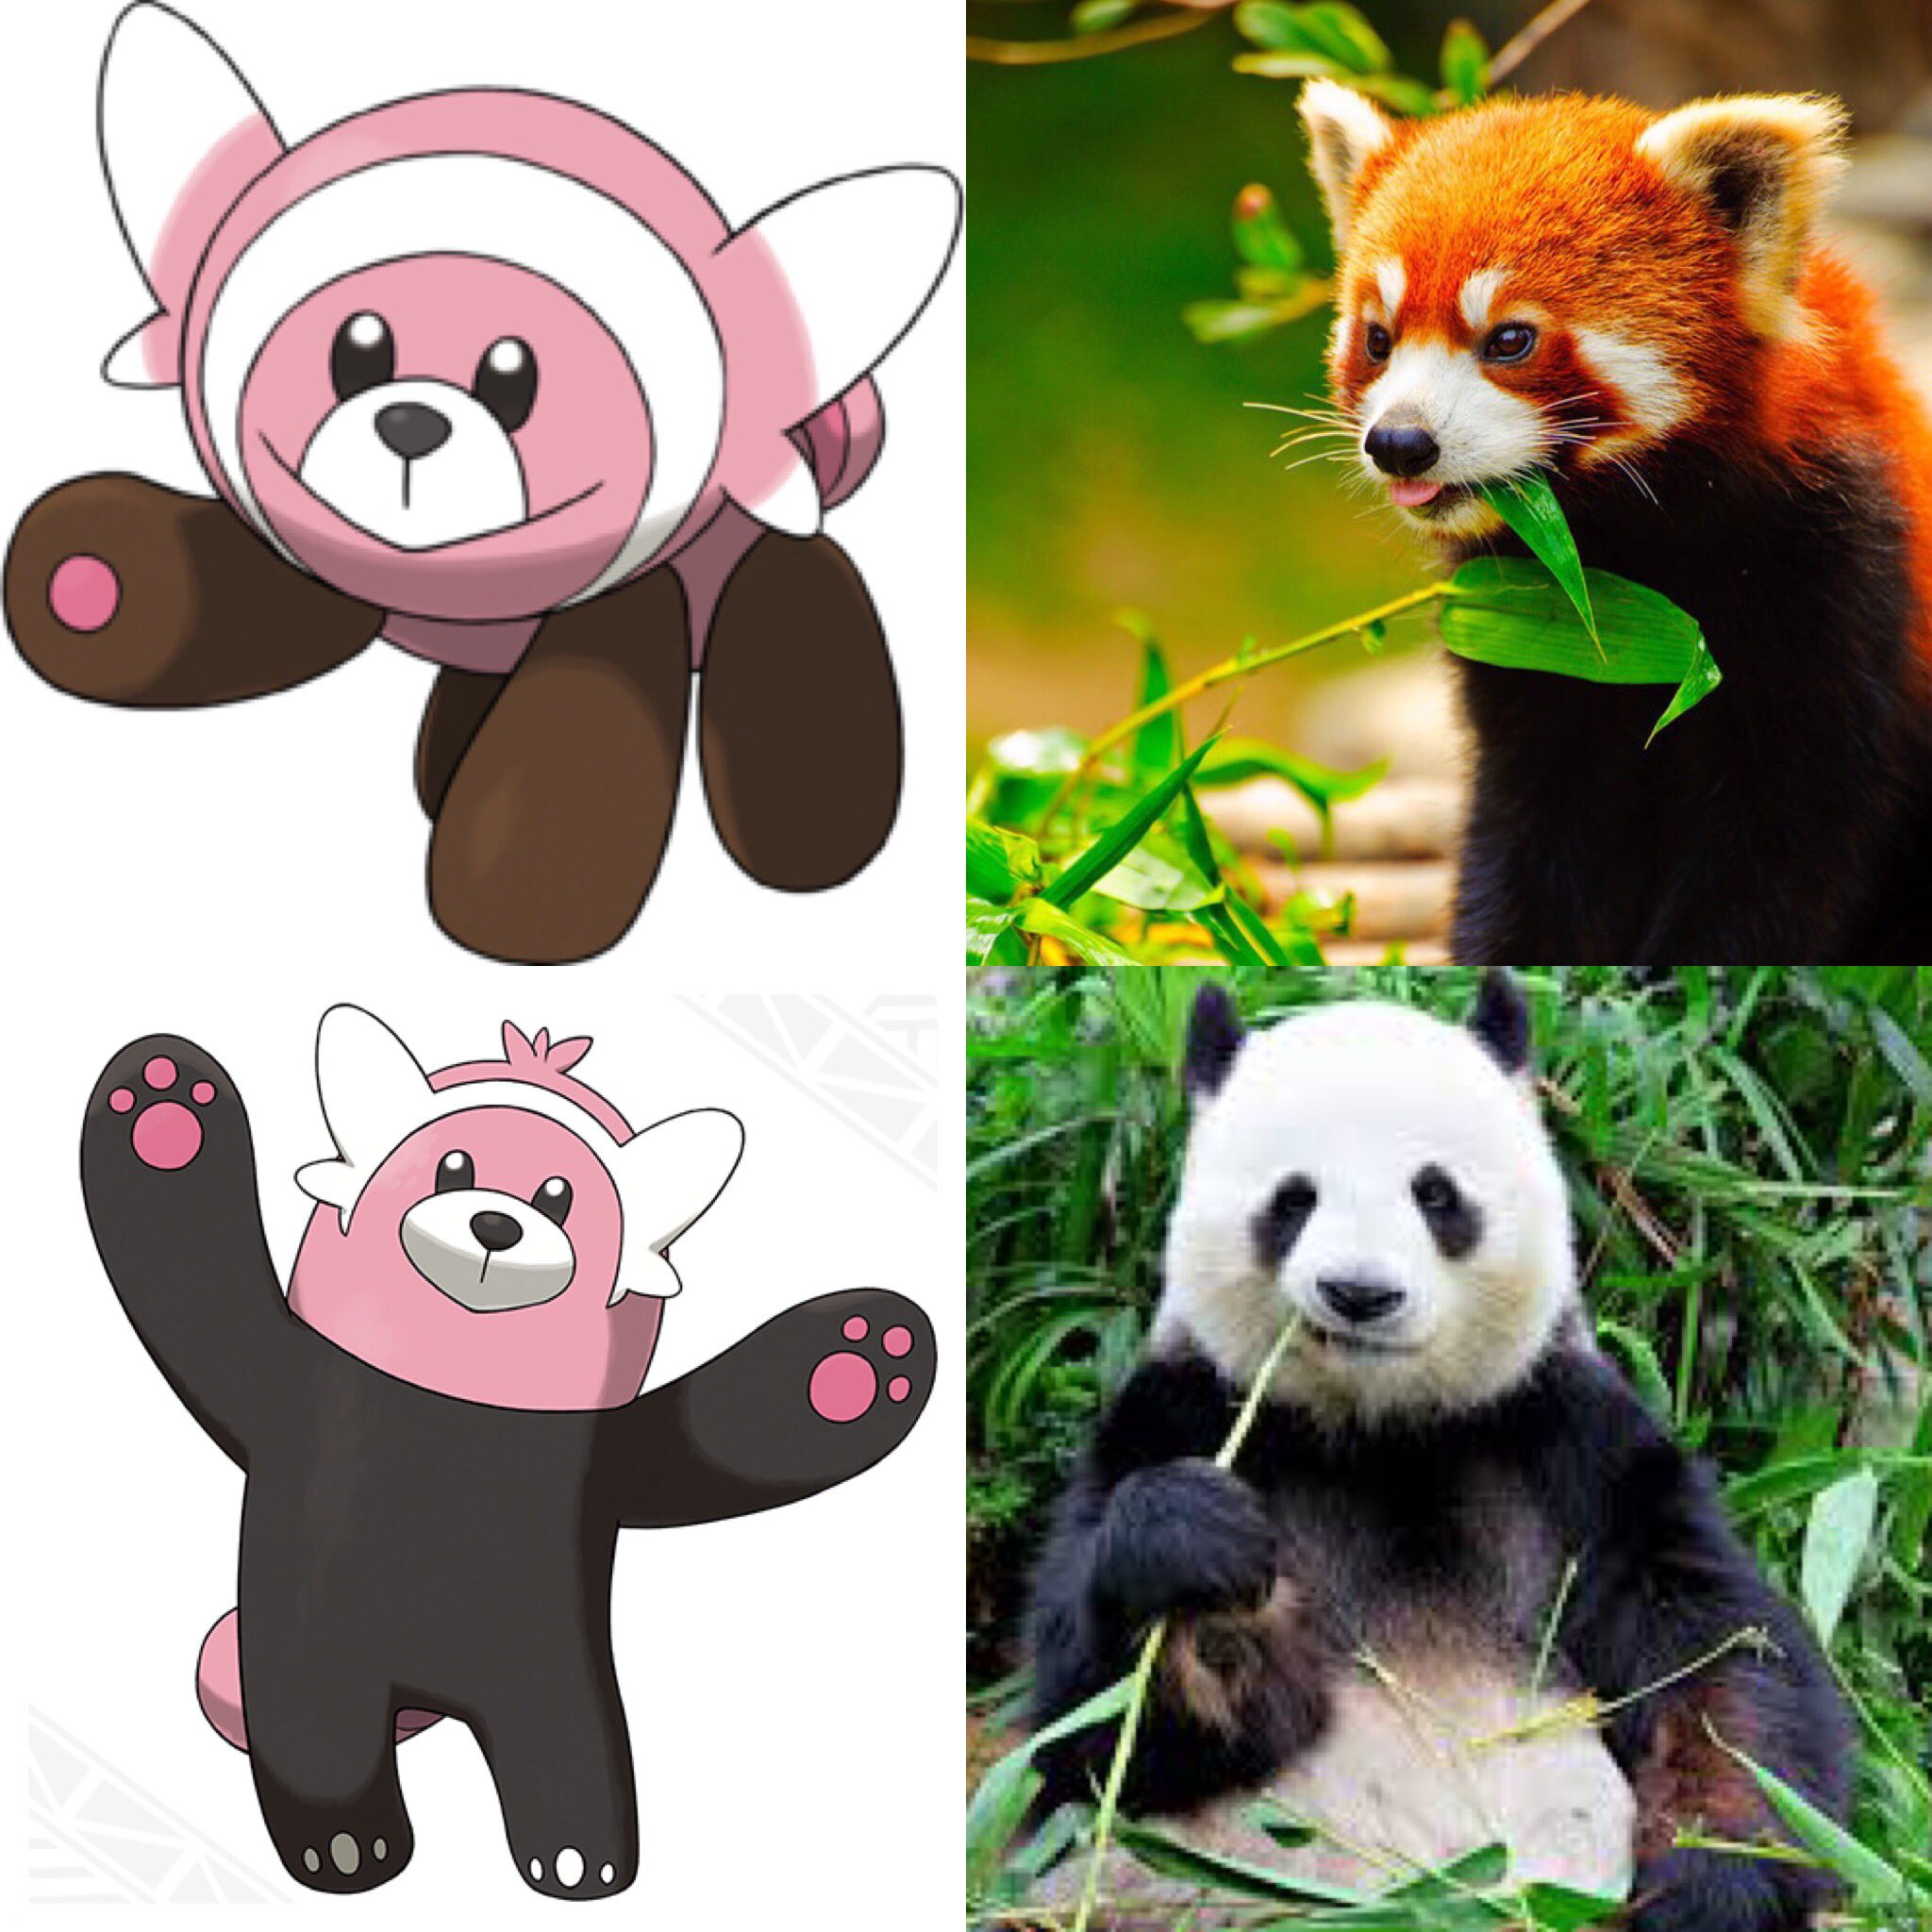 Beryl Ar Twitter So I Evolve Into A Giant Panda Equips Everstone Redpanda Redpandas Firefox Firecat Beryl Cute Animal Panda Pokemon Stufful T Co Hgafksfciz Twitter